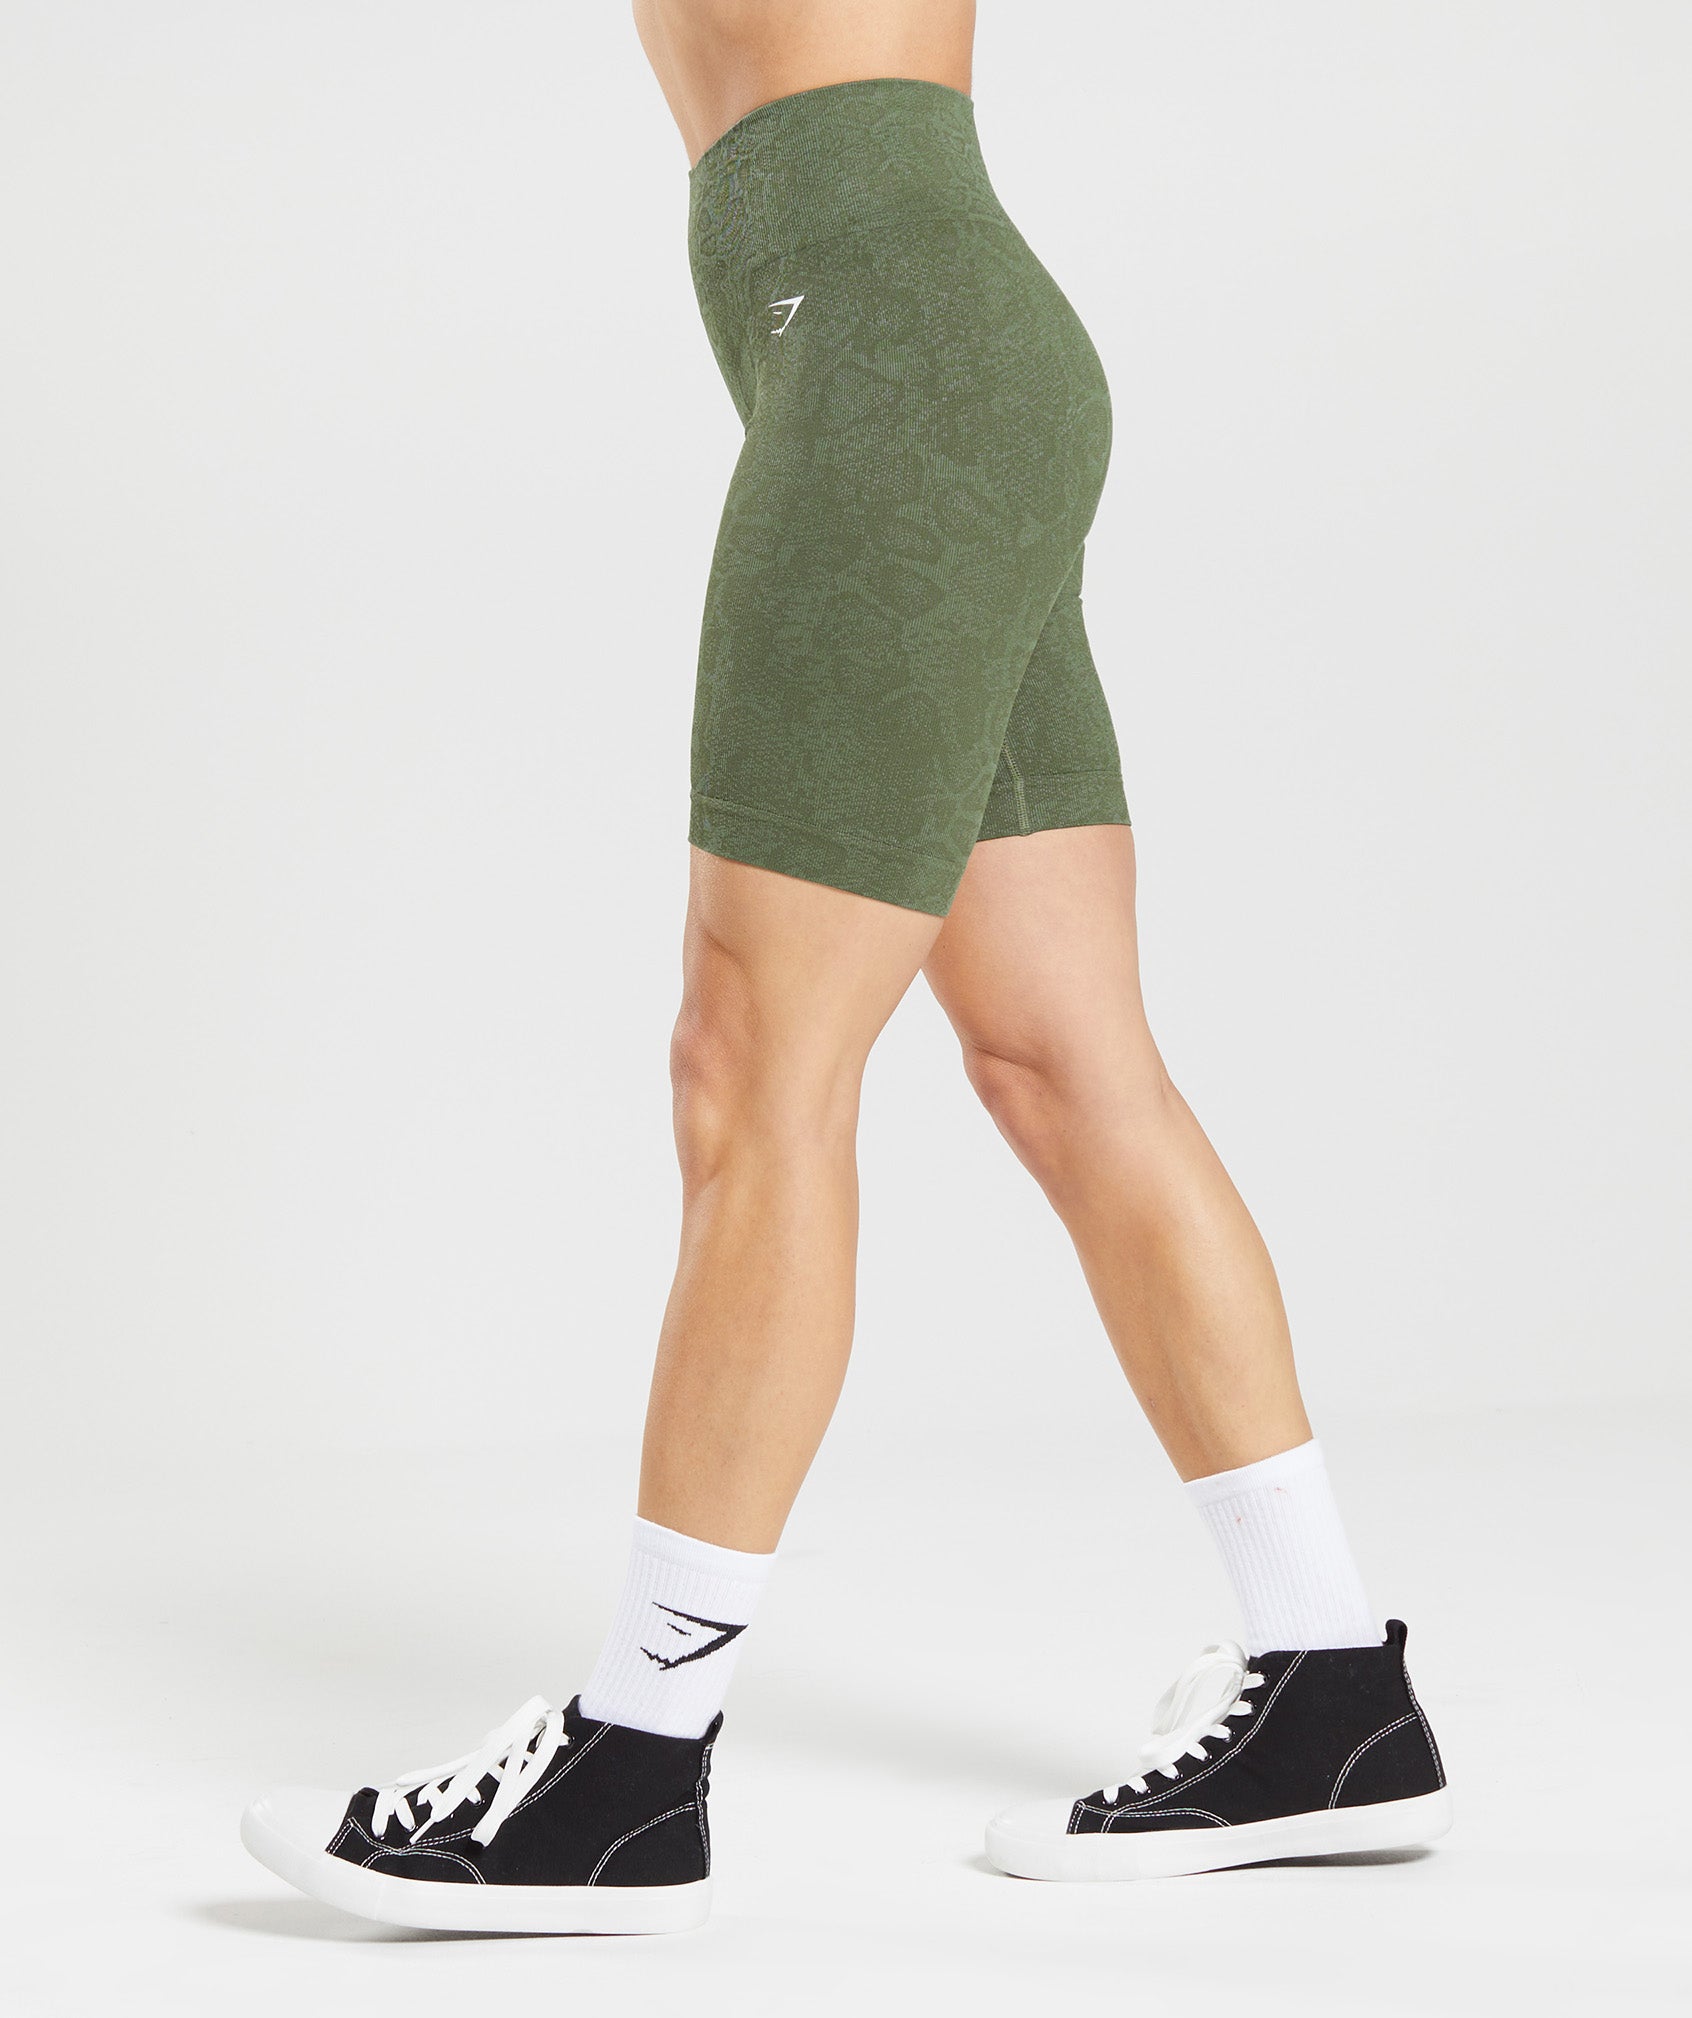 Dropship Green Casual Women's Shorts Sports High Waist Pocket